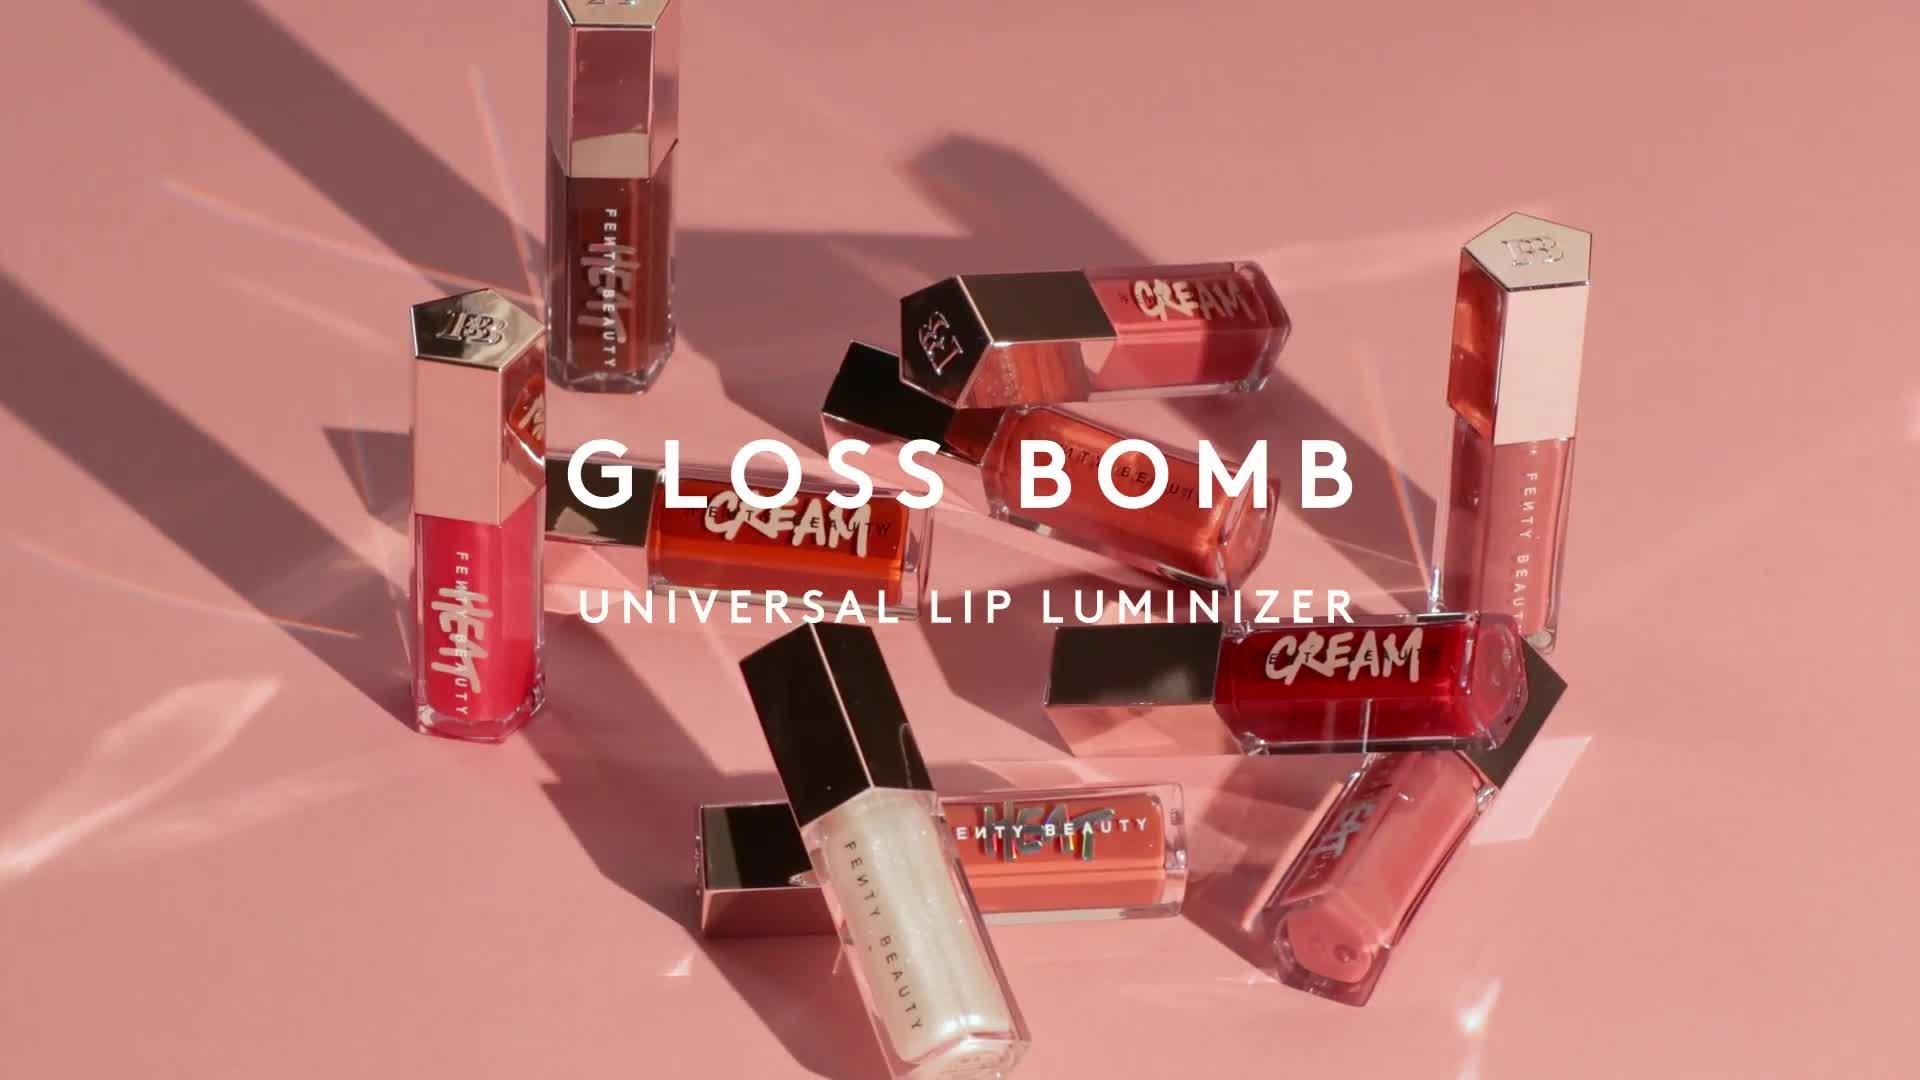 Fenty beauty by rihanna gloss bomb heat universal lip luminizer +